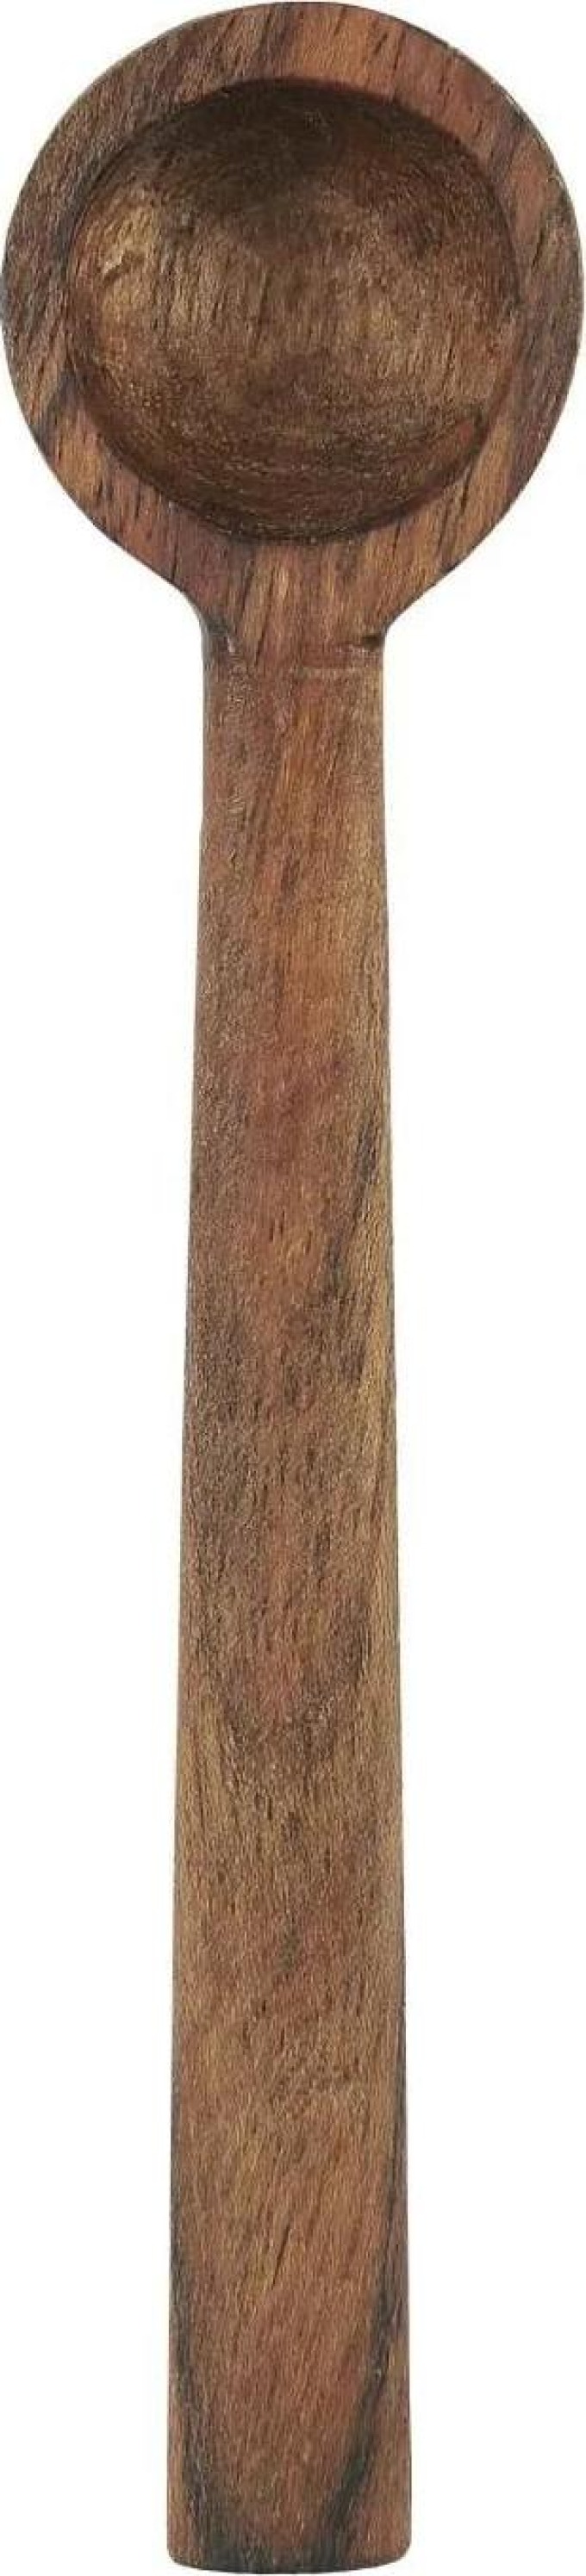 IB LAURSEN Lžička z akáciového dřeva Oiled Acacia, přírodní barva, dřevo